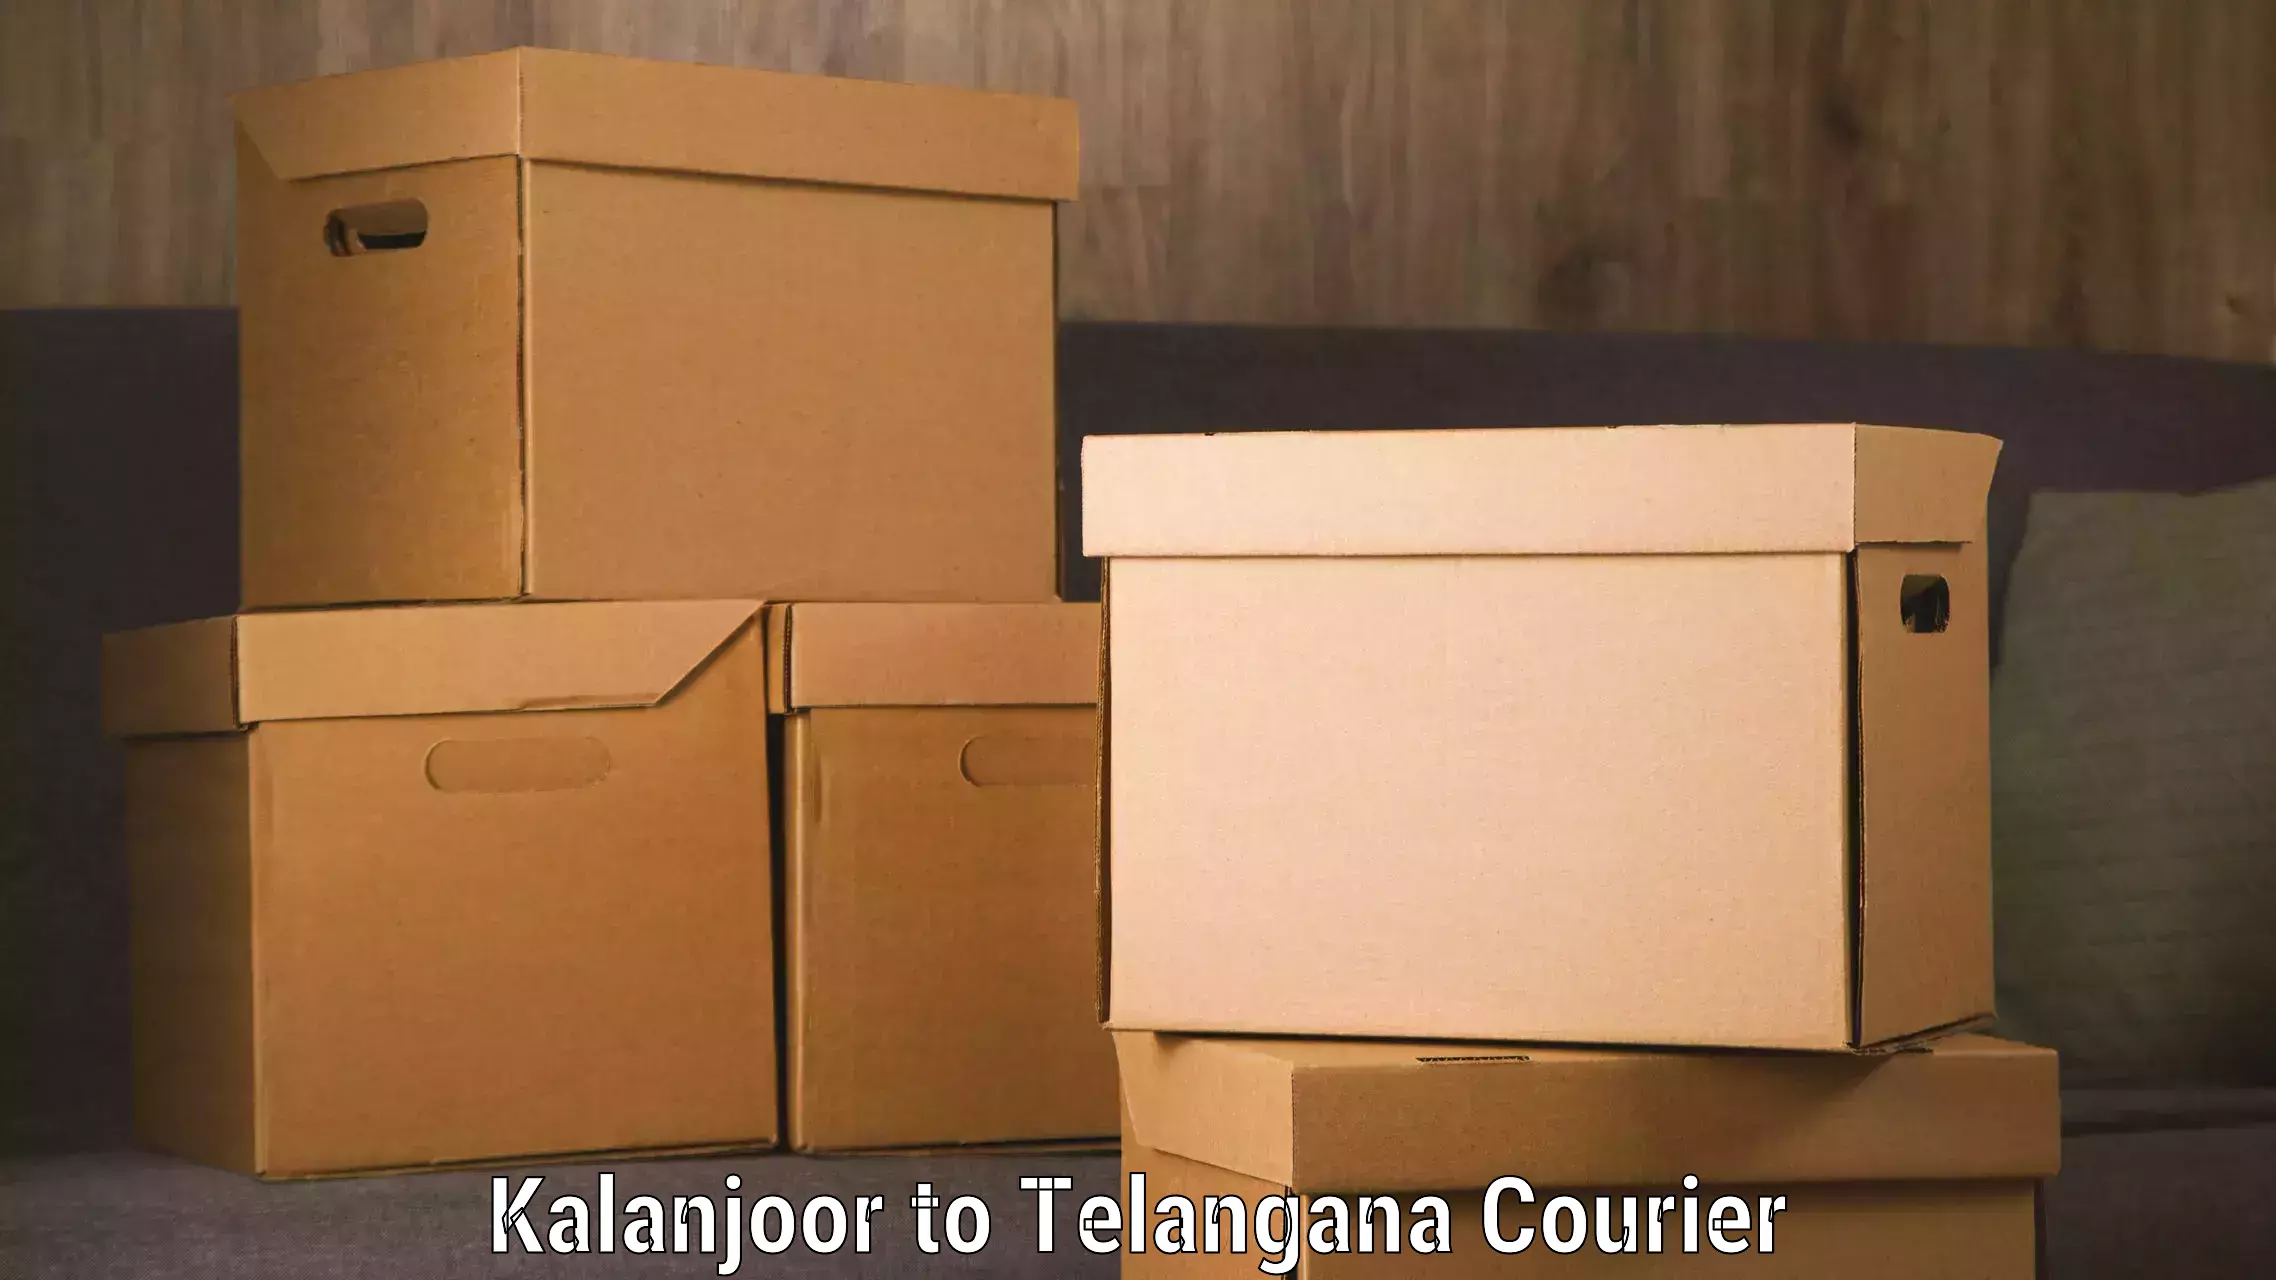 Enhanced tracking features Kalanjoor to Madhira